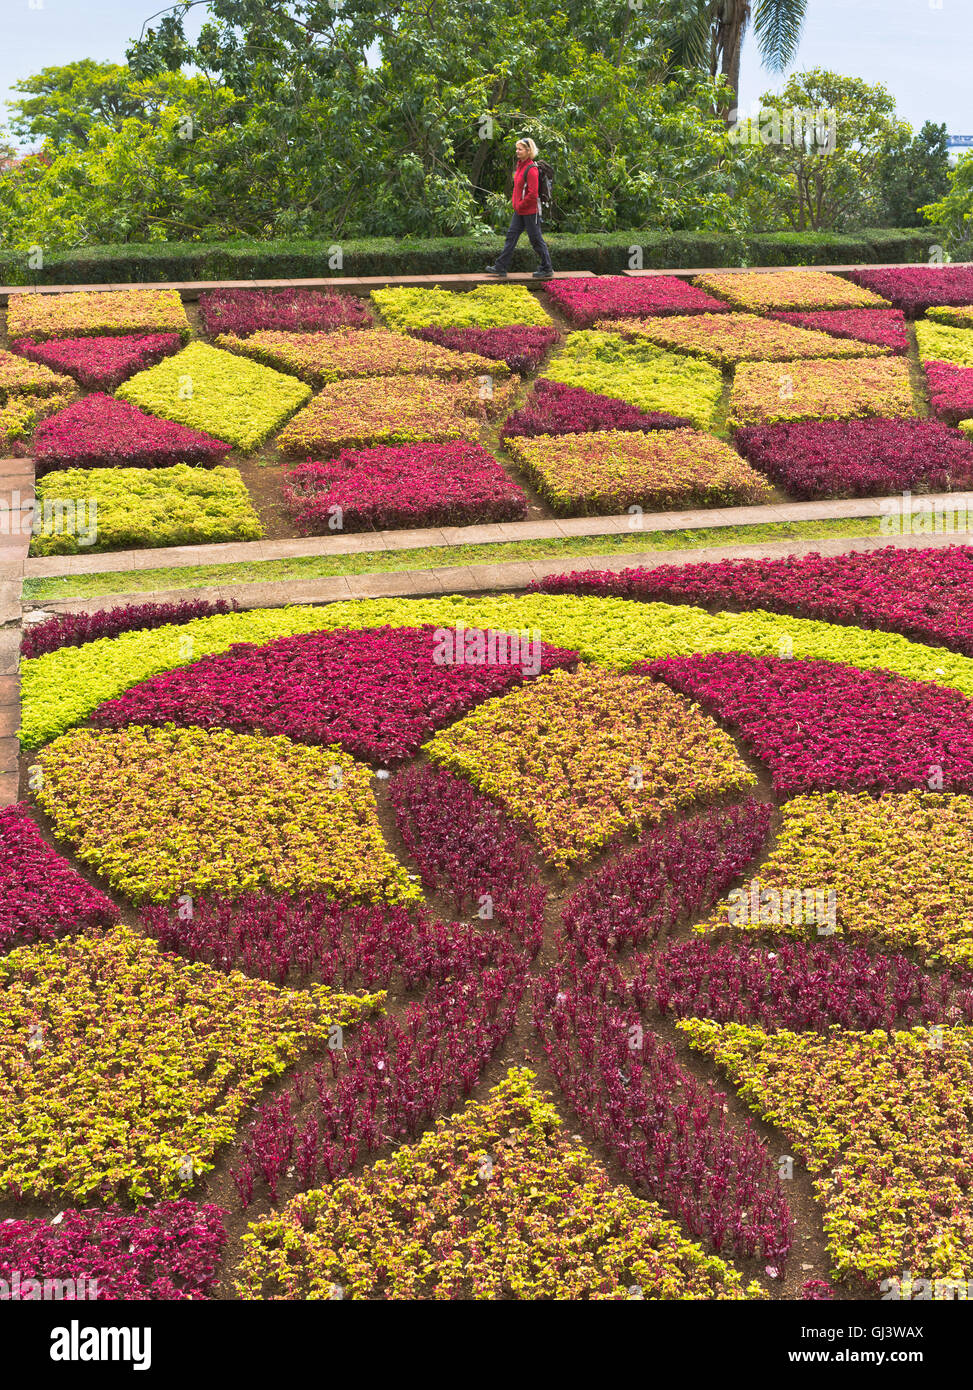 Dh Botanical Gardens Funchal Madeira touristische Frau Hecke pflanzen Mosaik Muster garten Blume Stockfoto